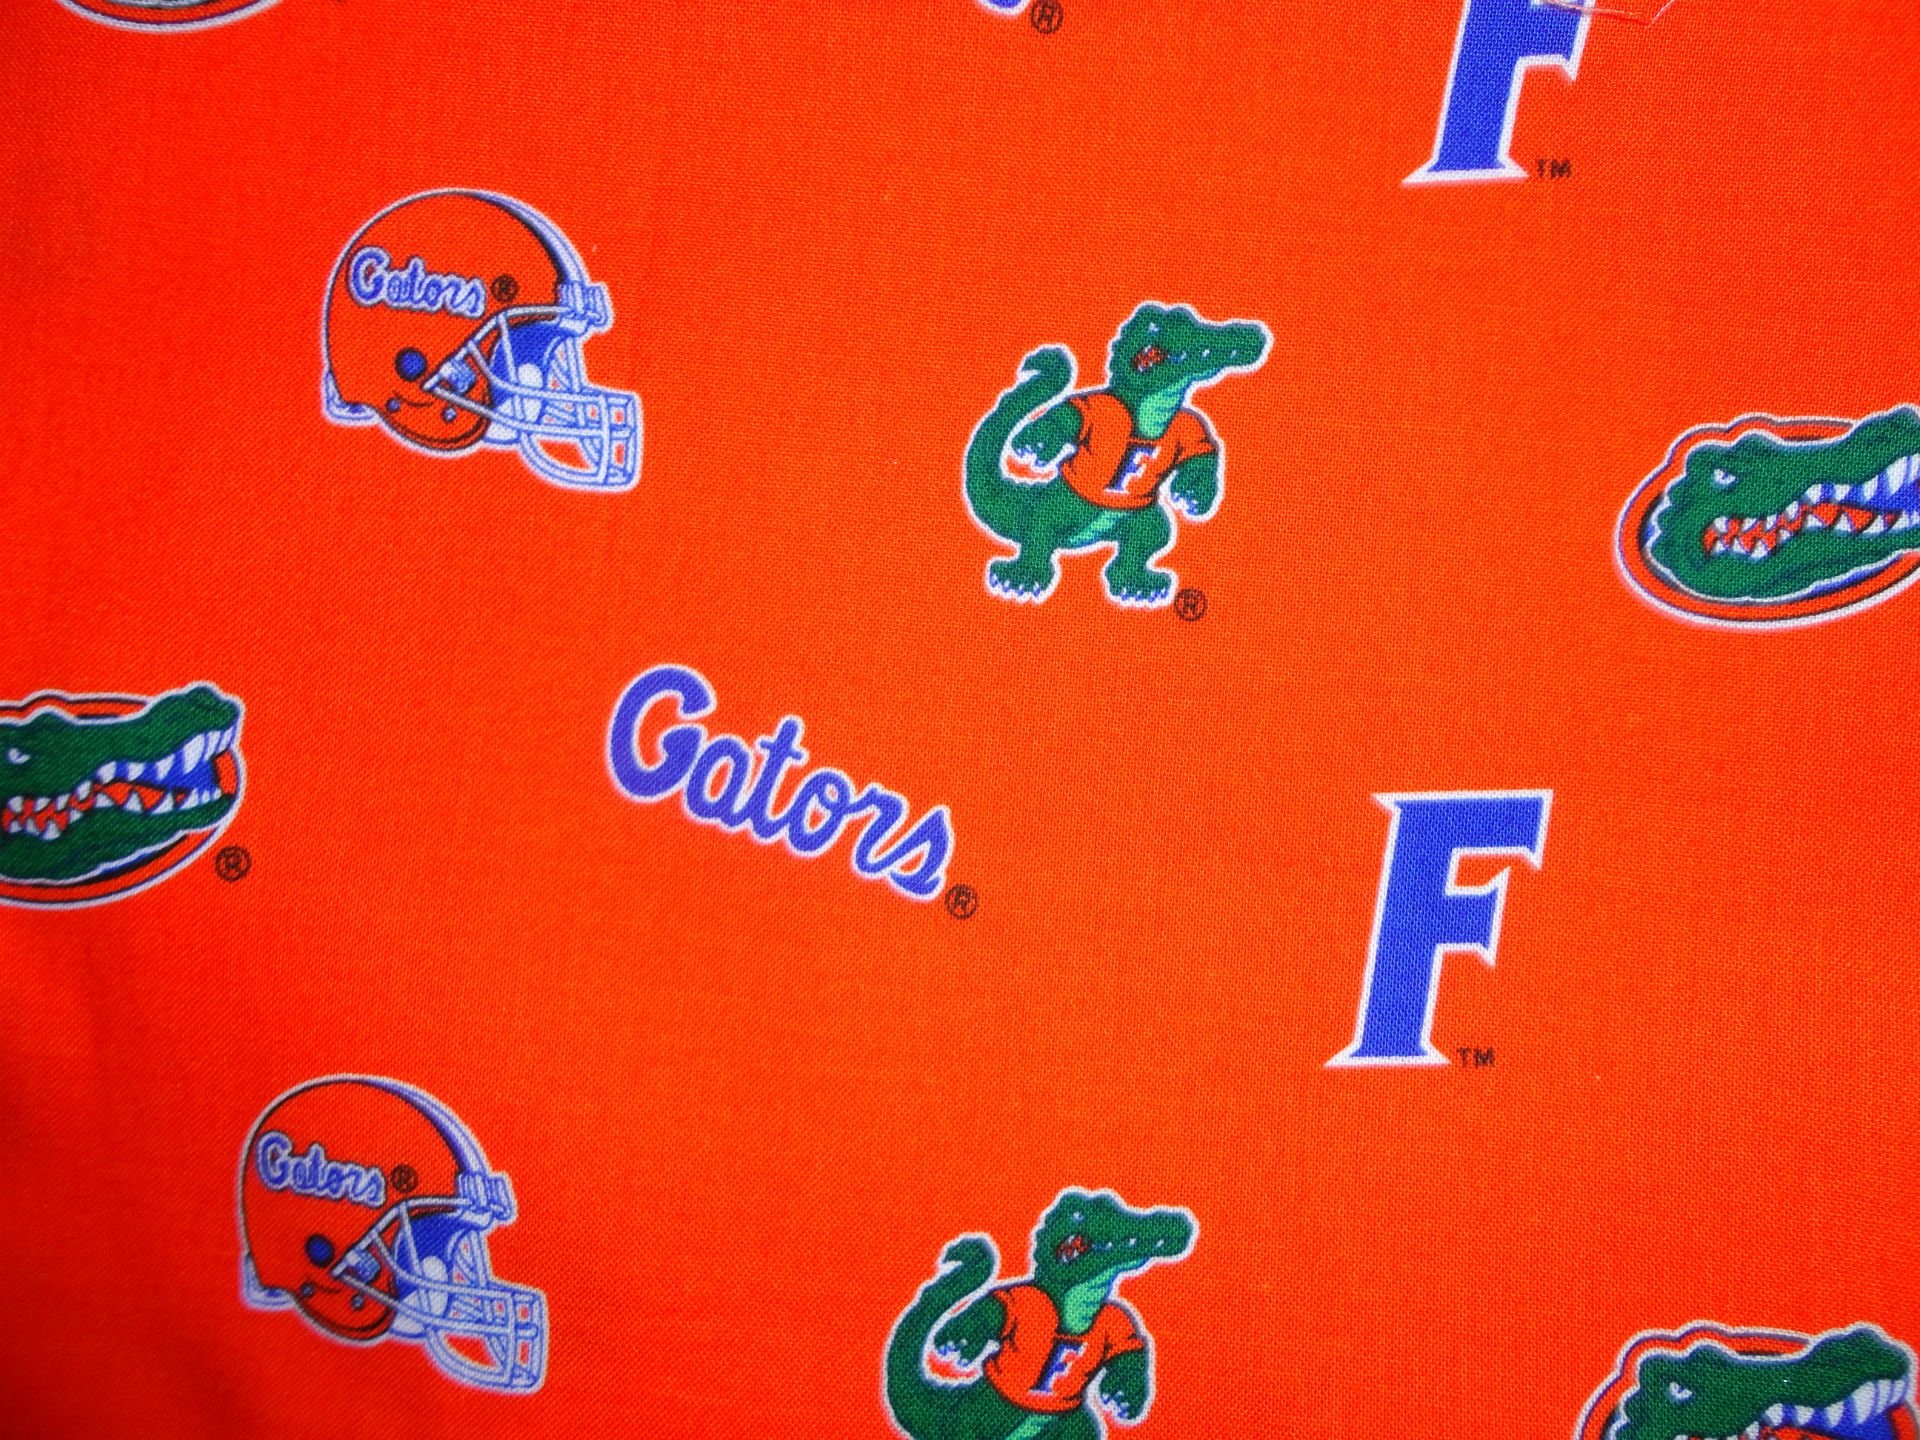 FLORIDA GATORS college football wallpaper background